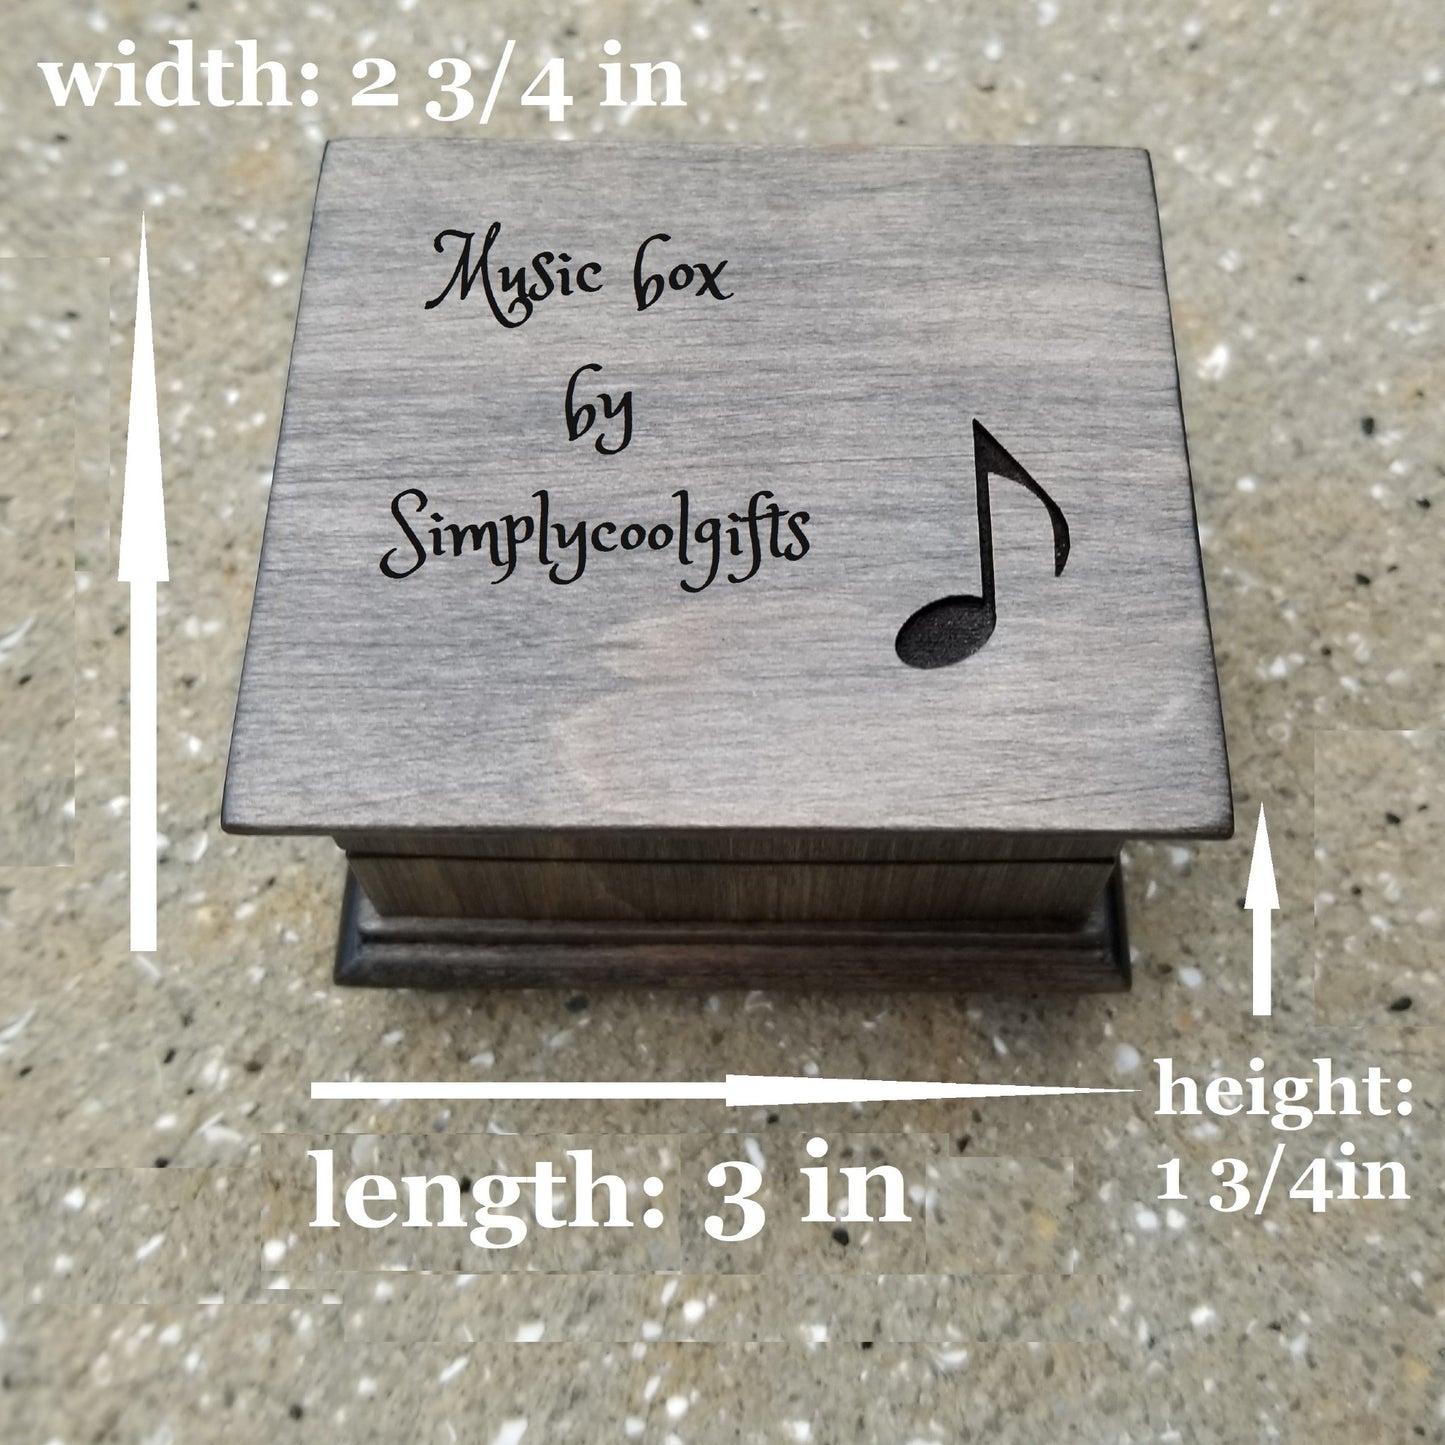 music box sizing details